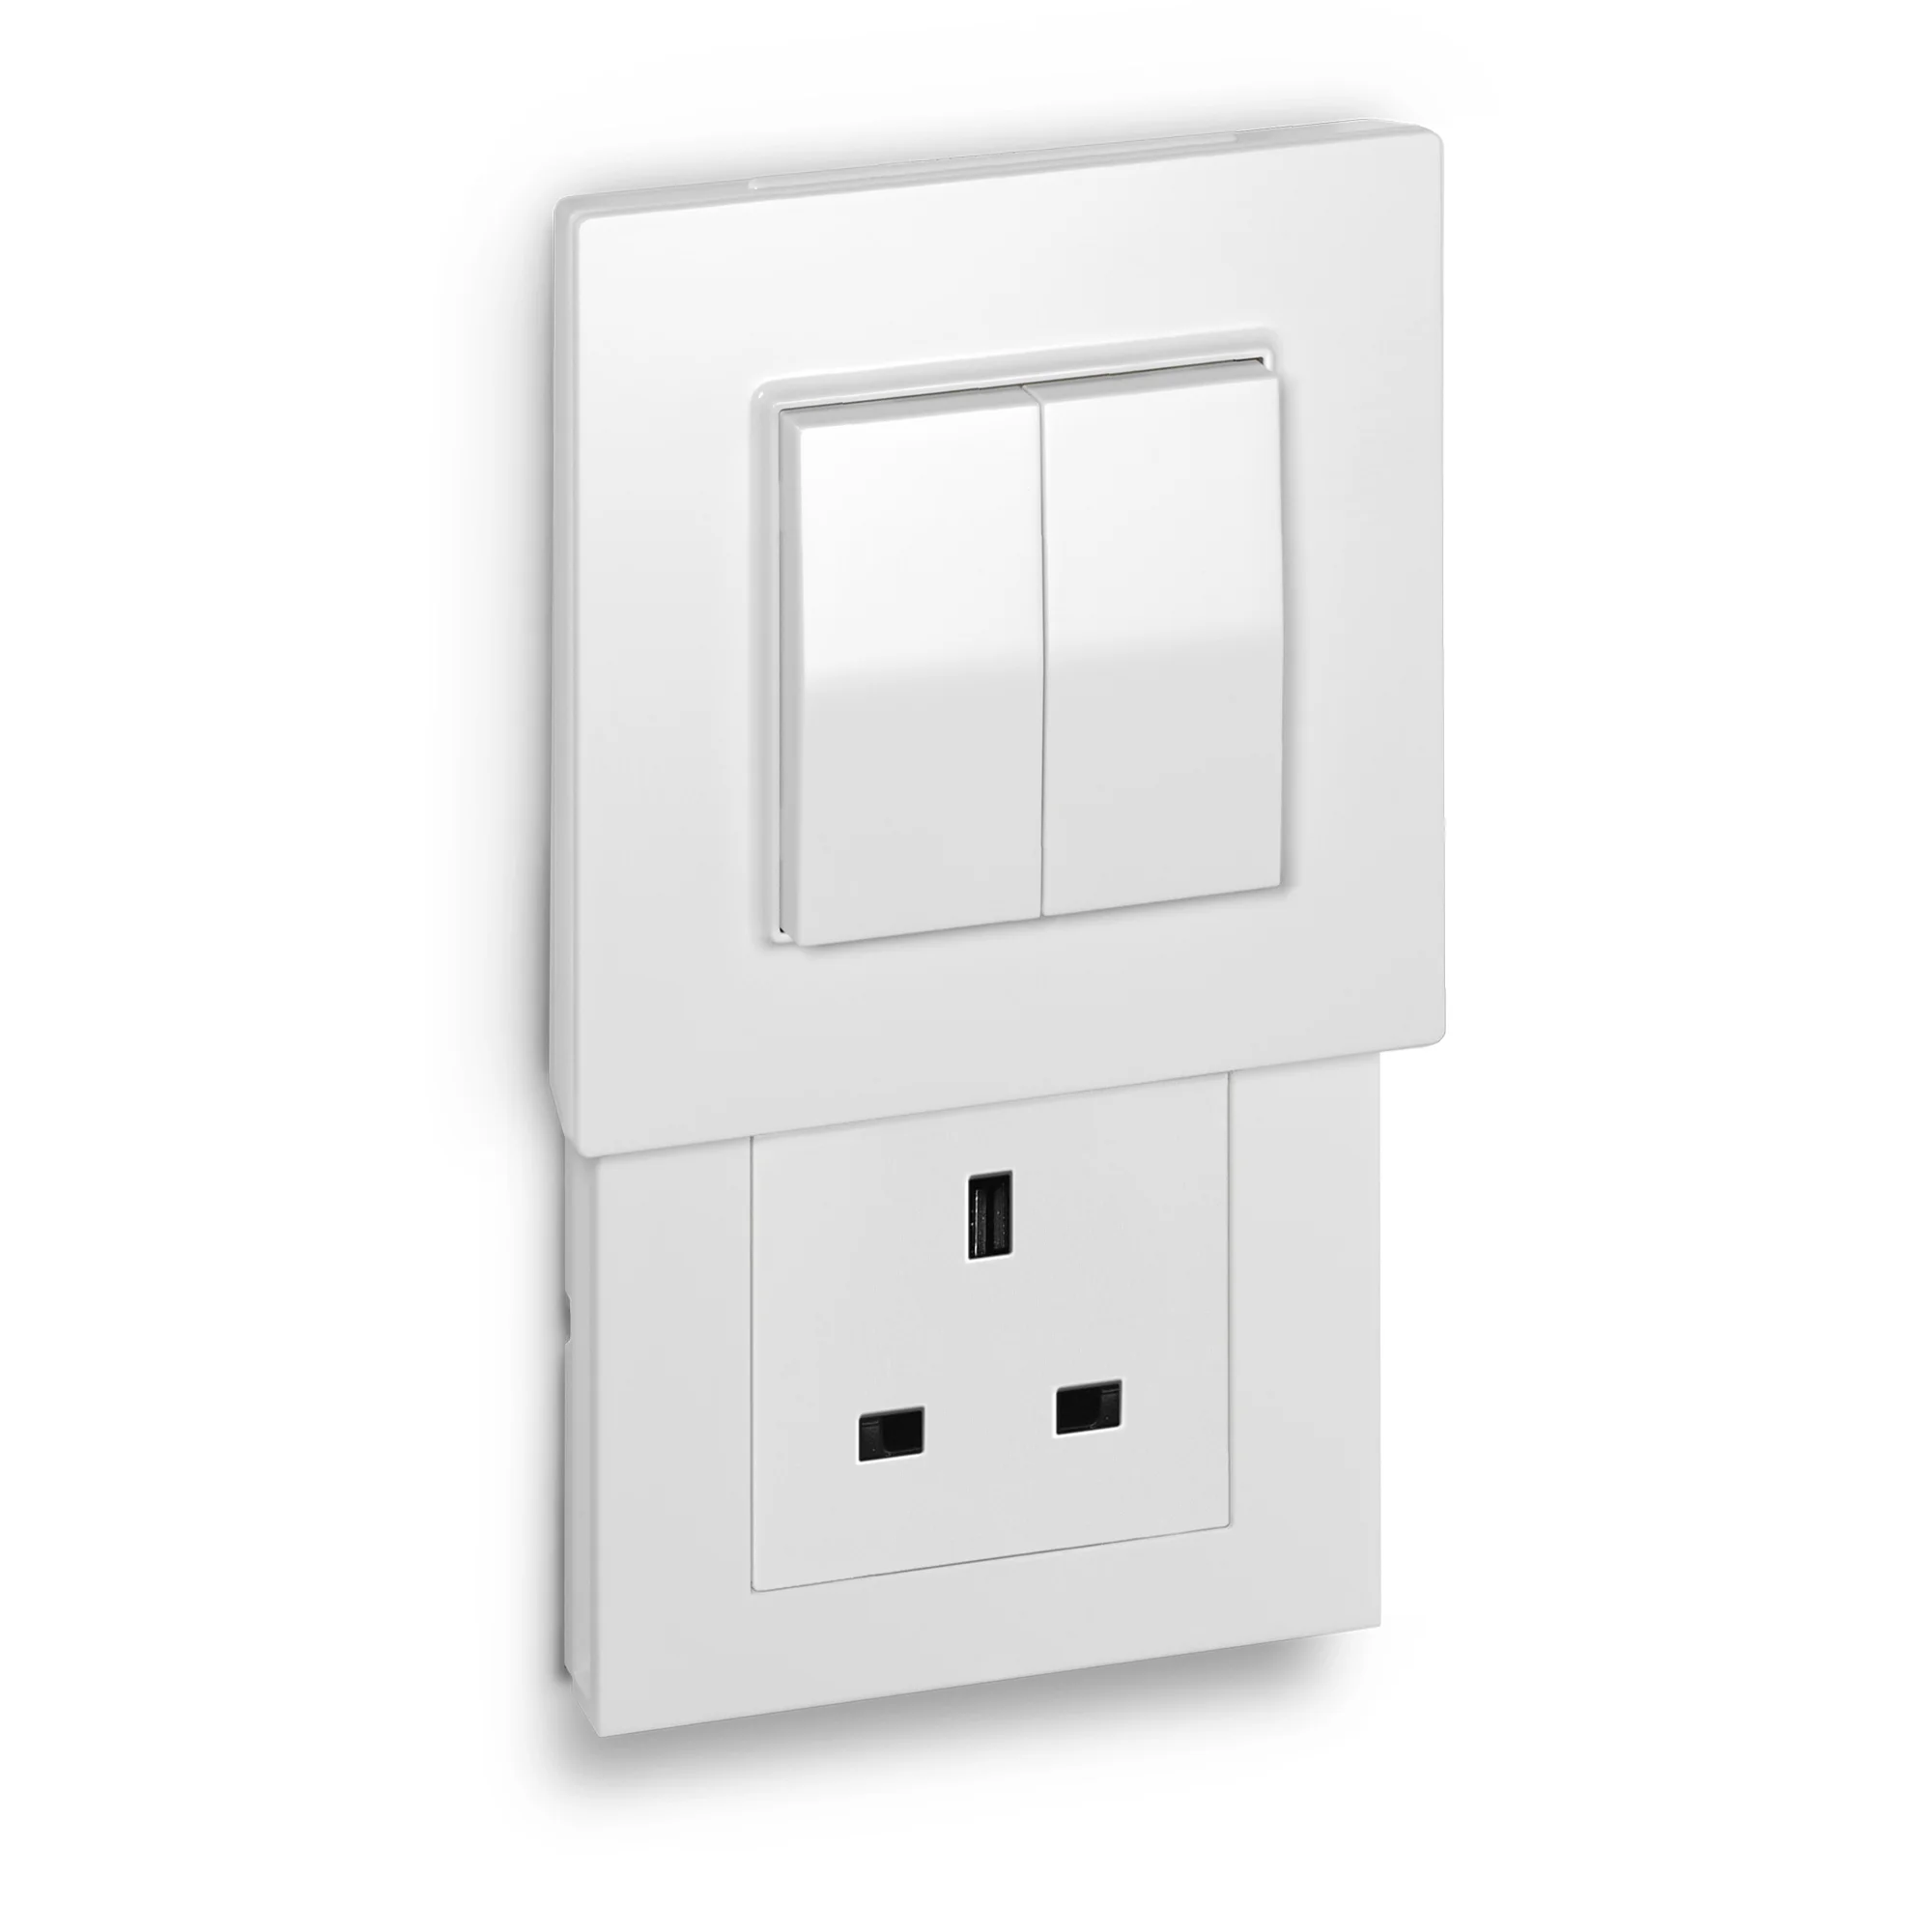 Hidden Socket | Versteckdose® with EnOcean switch with socket insert for plug type G (UK)